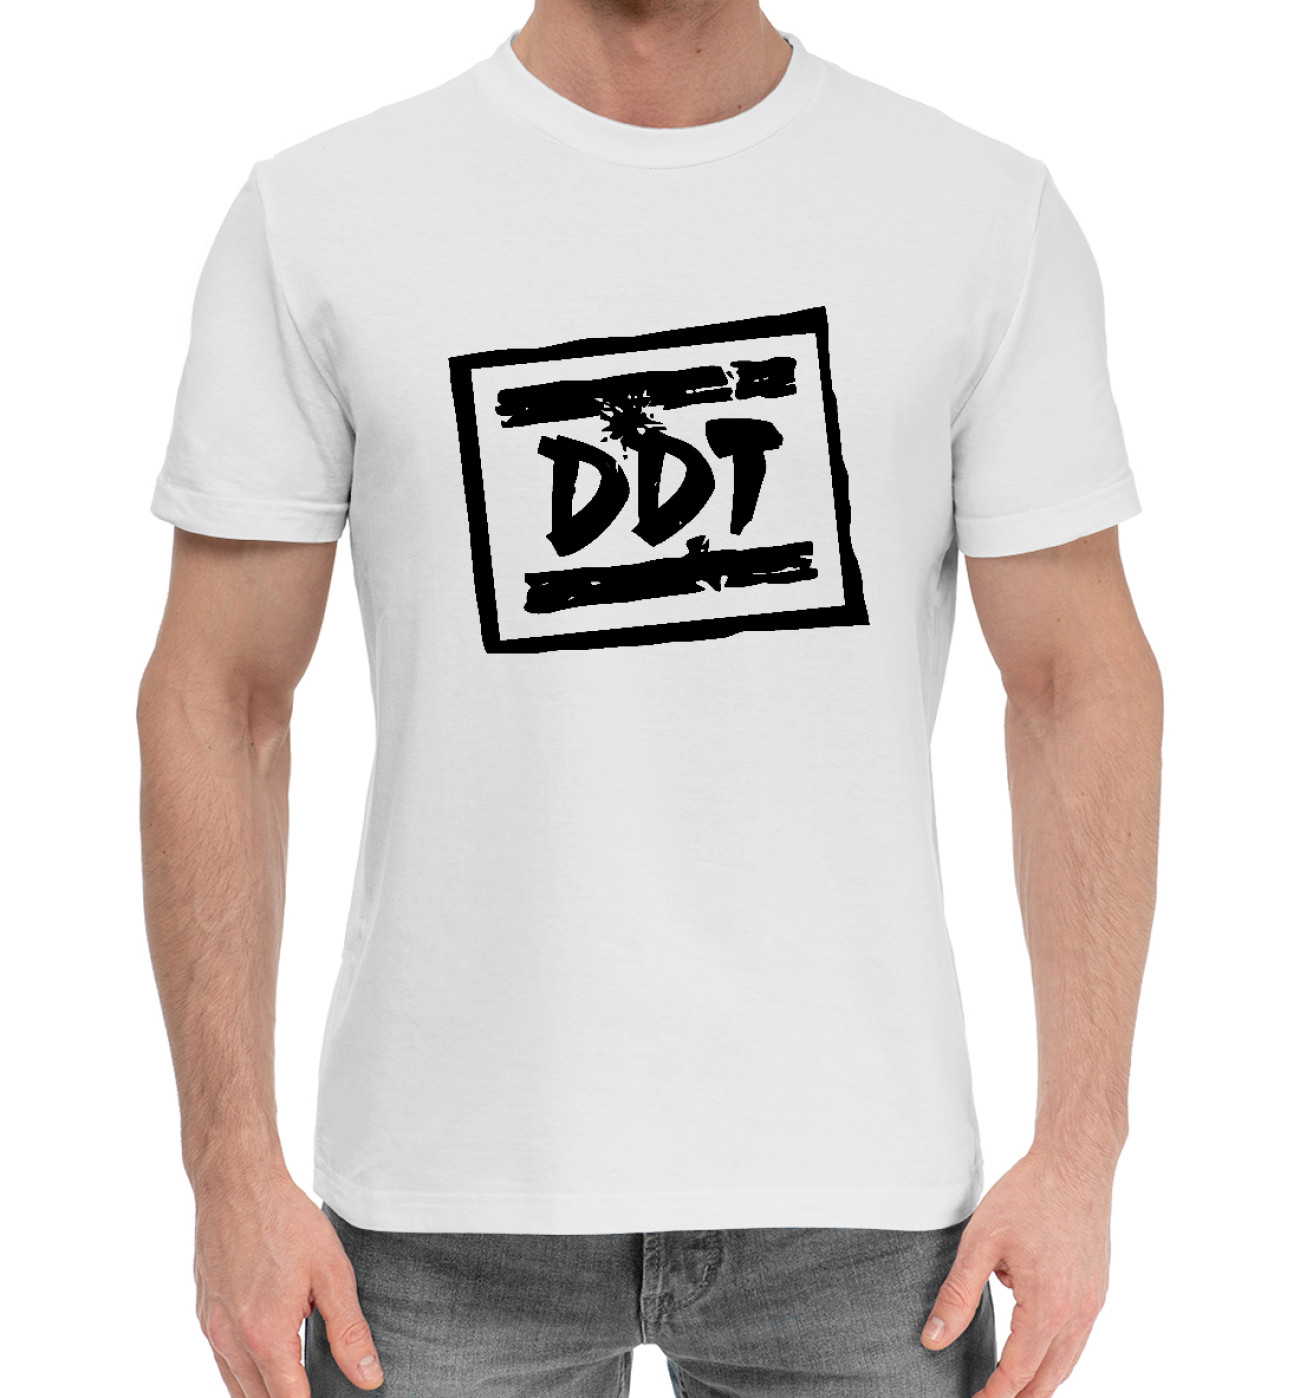 Мужская Хлопковая футболка ДДТ лого, артикул: DTT-724302-hfu-2